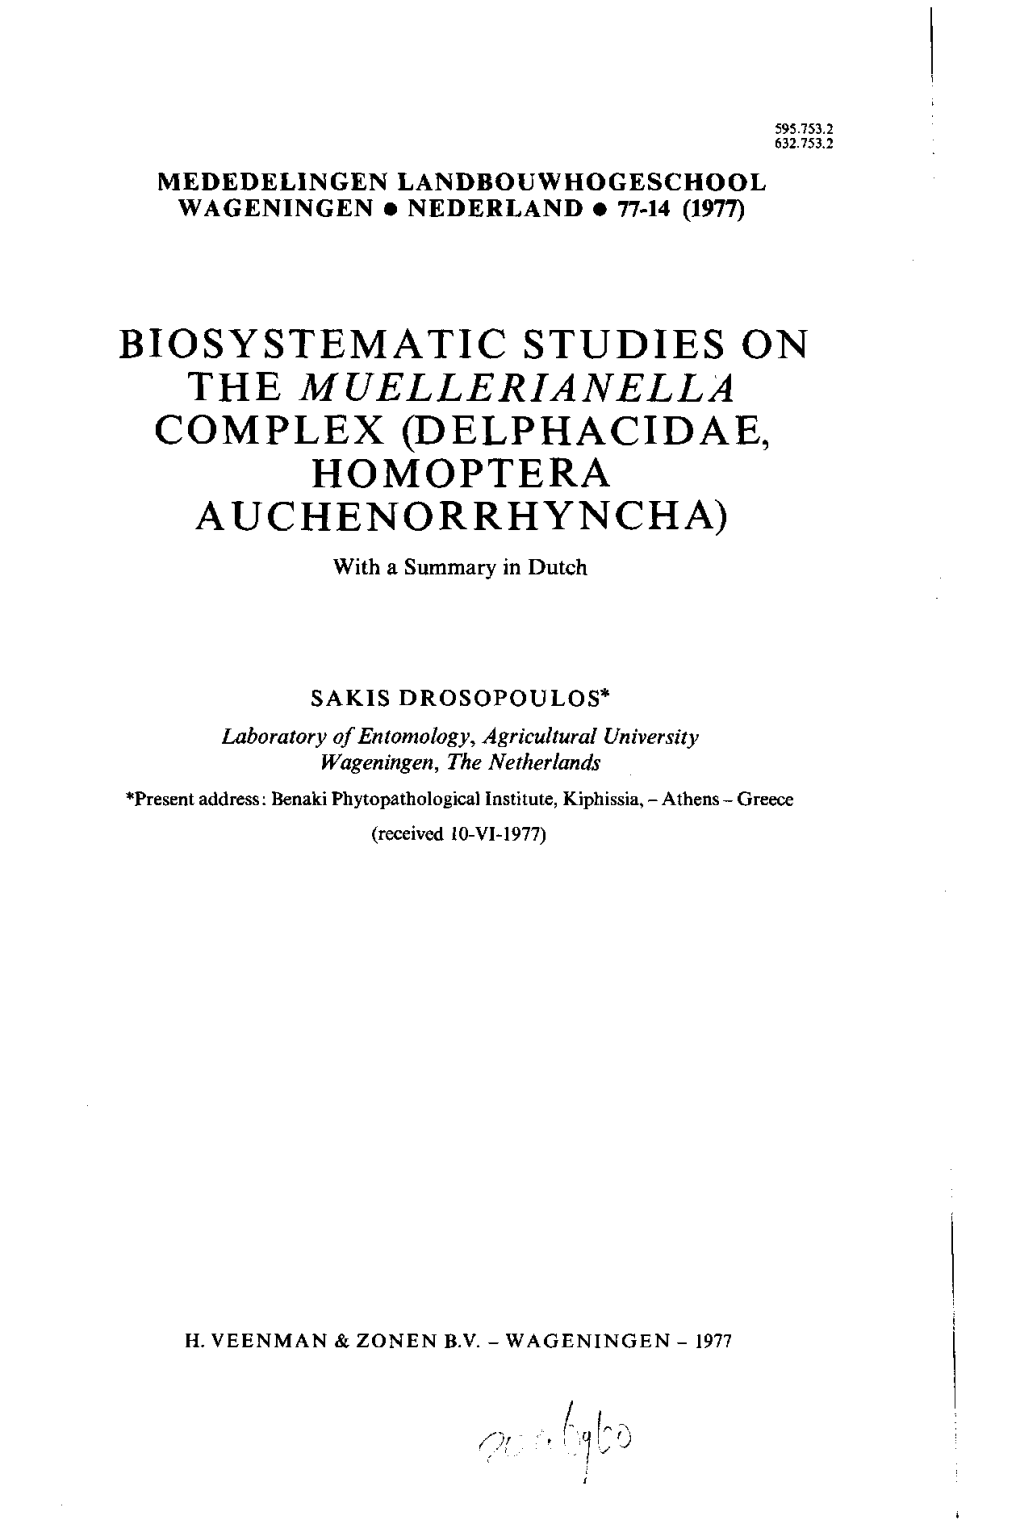 BIOSYSTEMATIC STUDIES on the MUELLERIANELLÄ COMPLEX (DELPHACIDAE, HOMOPTERA AUCHENORRHYNCHA) with a Summary in Dutch